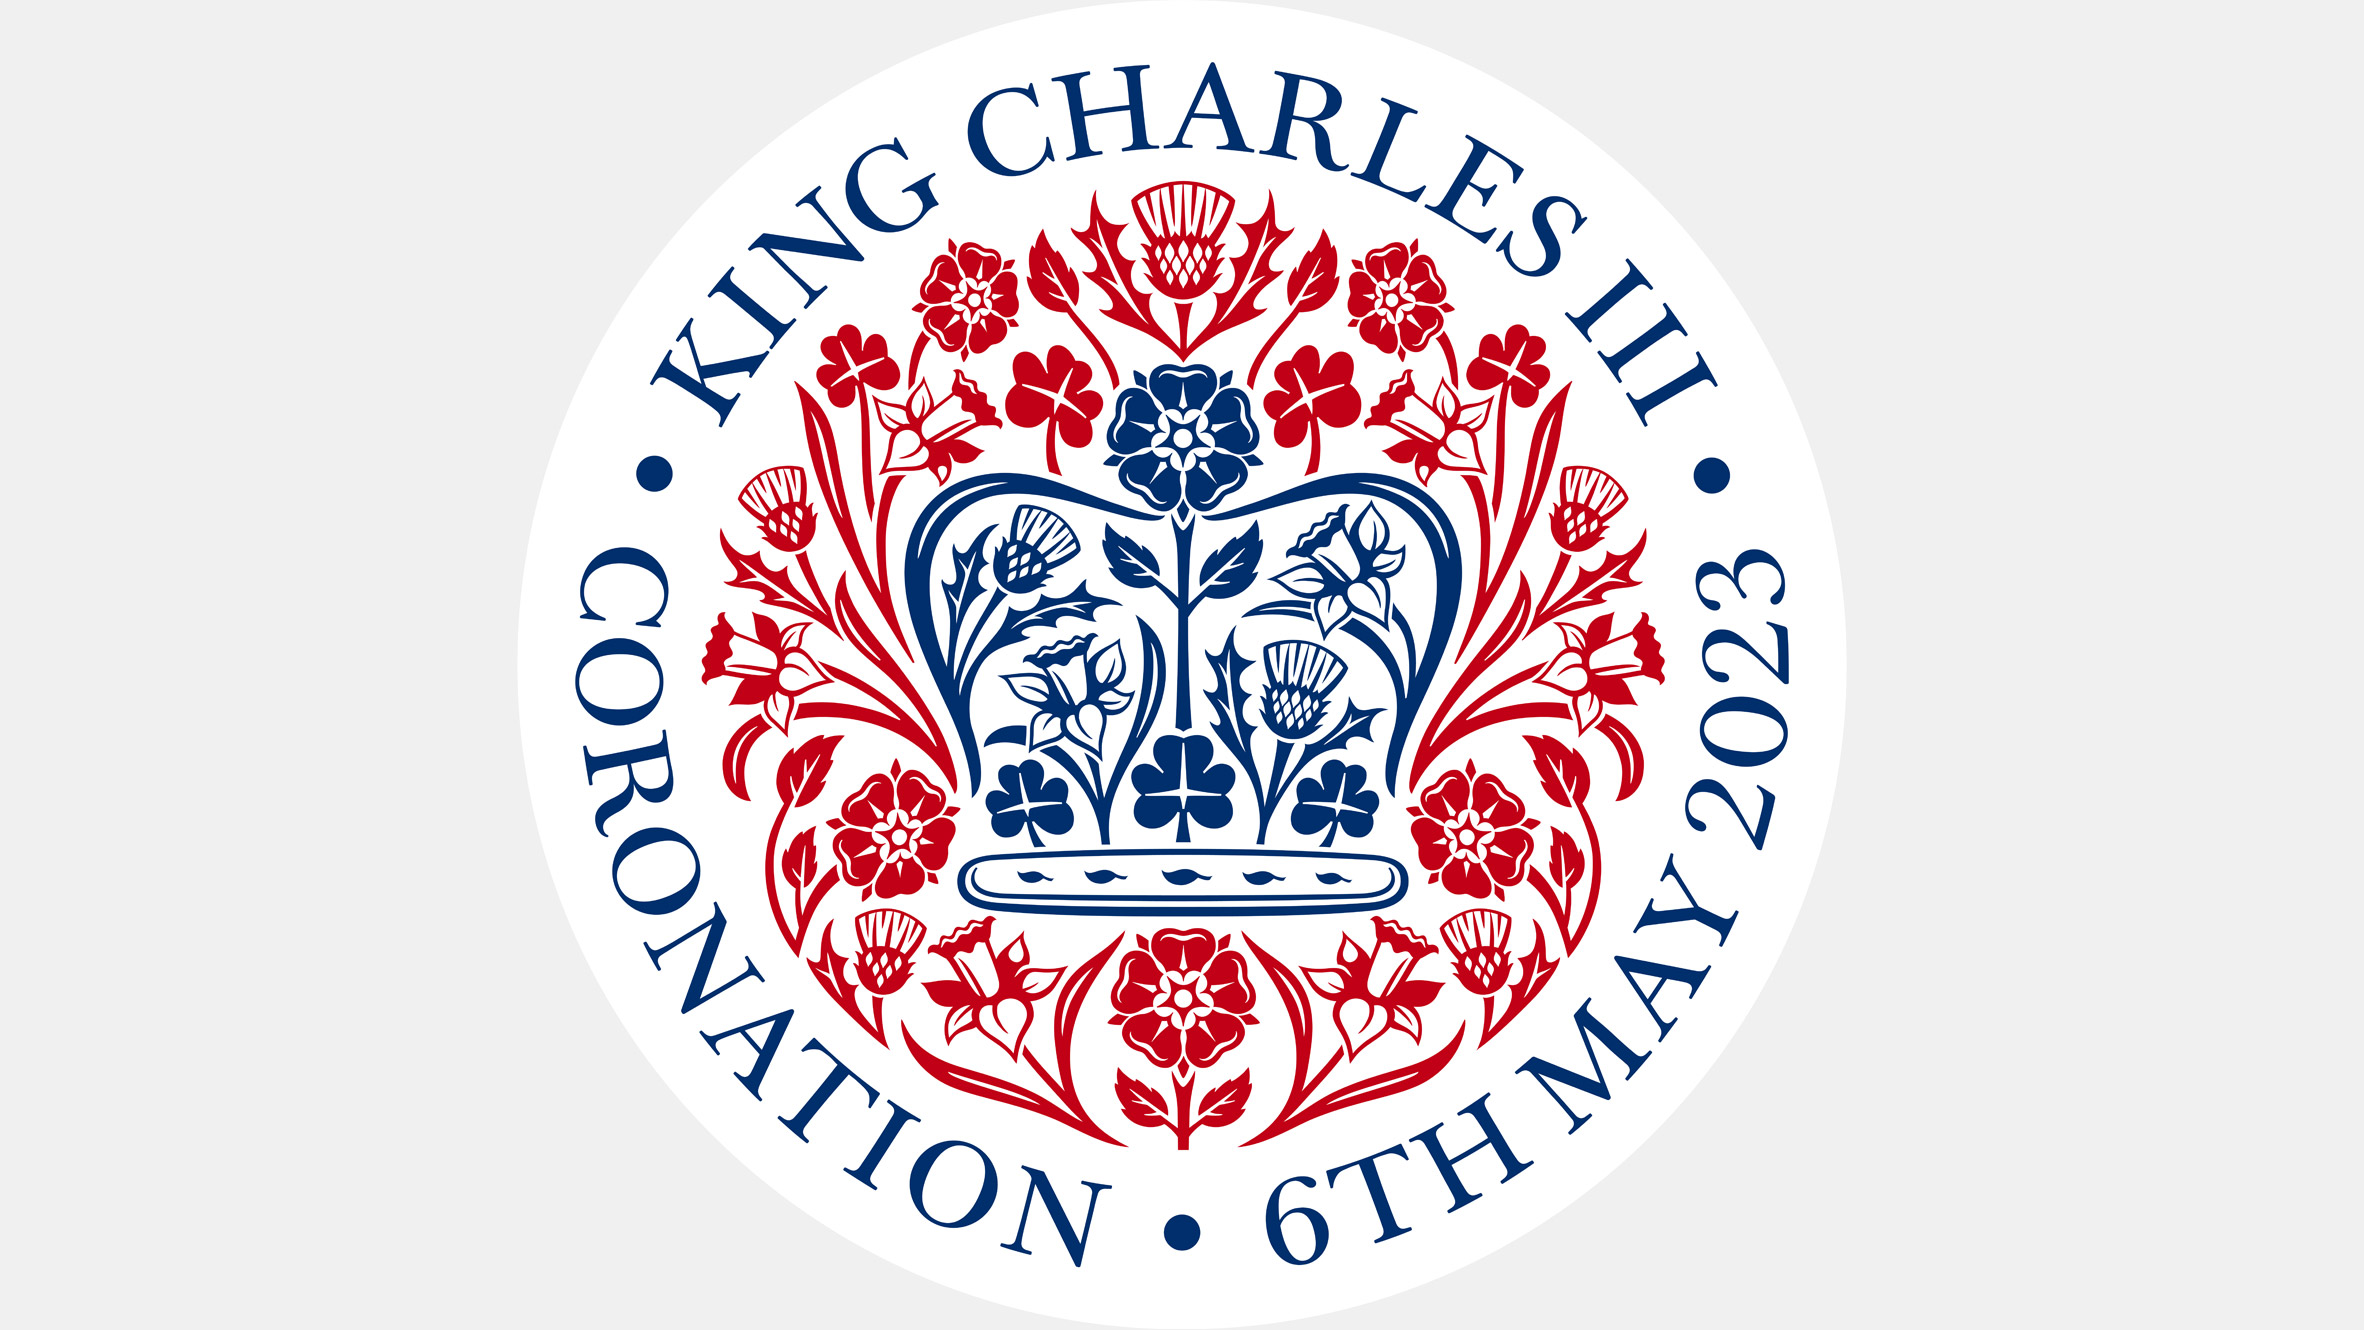 Coronation logo of King Charles III designed by Jony Ive